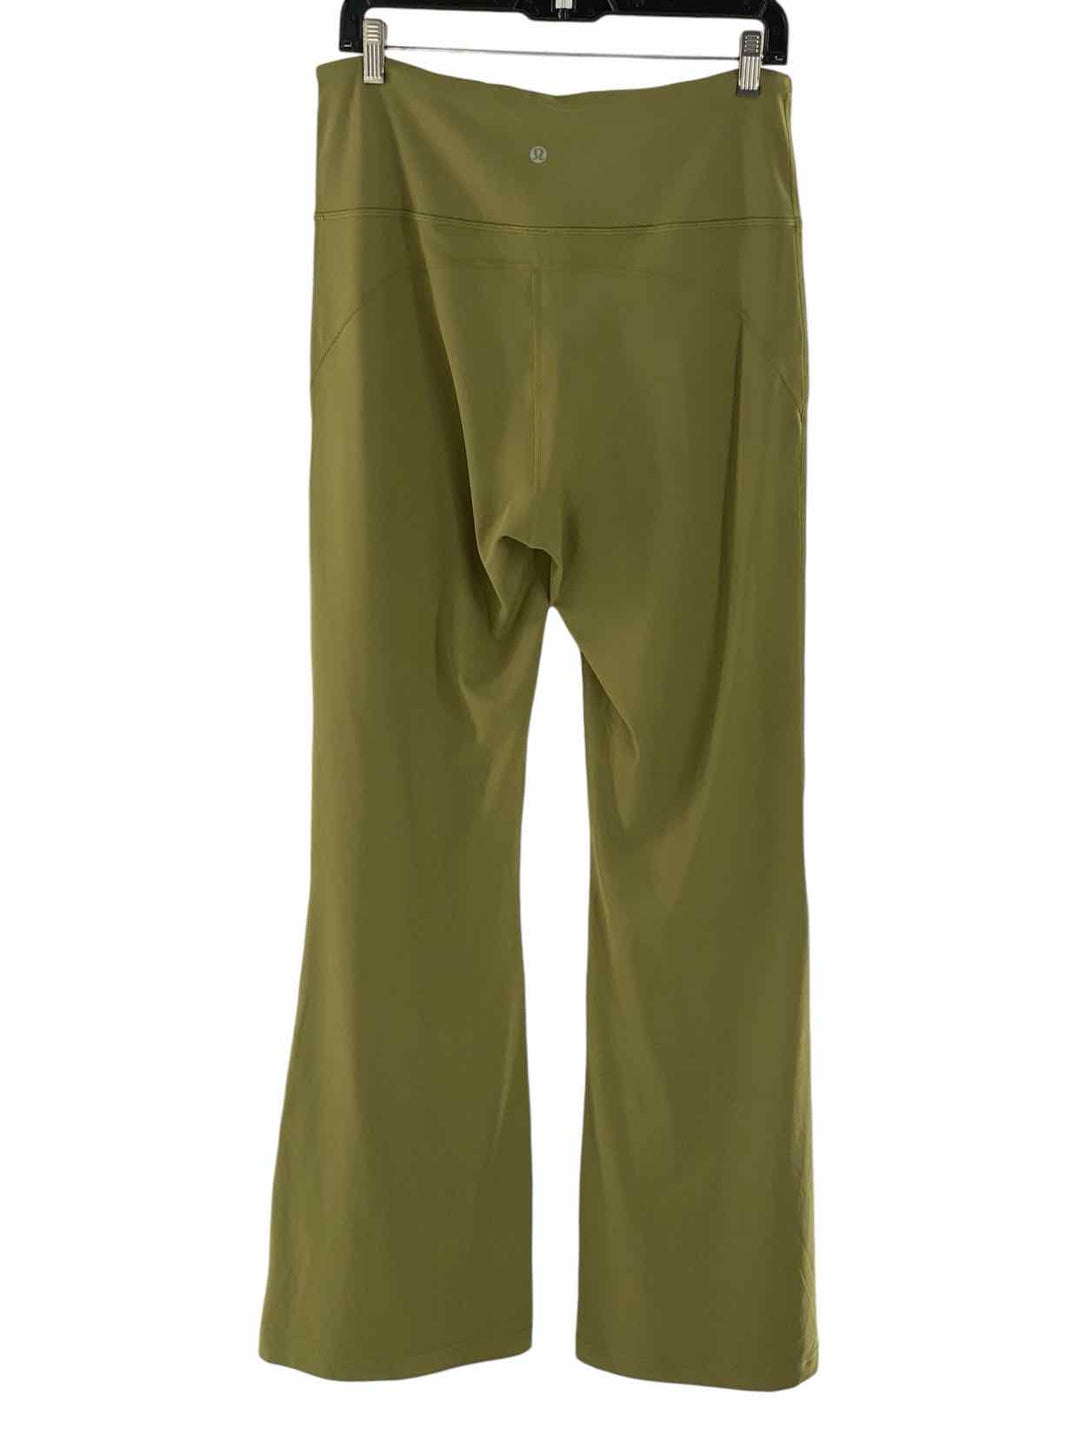 Lululemon Size 12 Green Athletic Pants